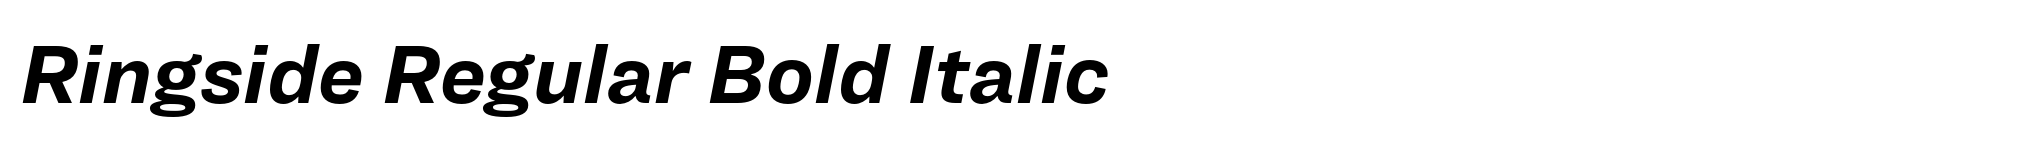 Ringside Regular Bold Italic image